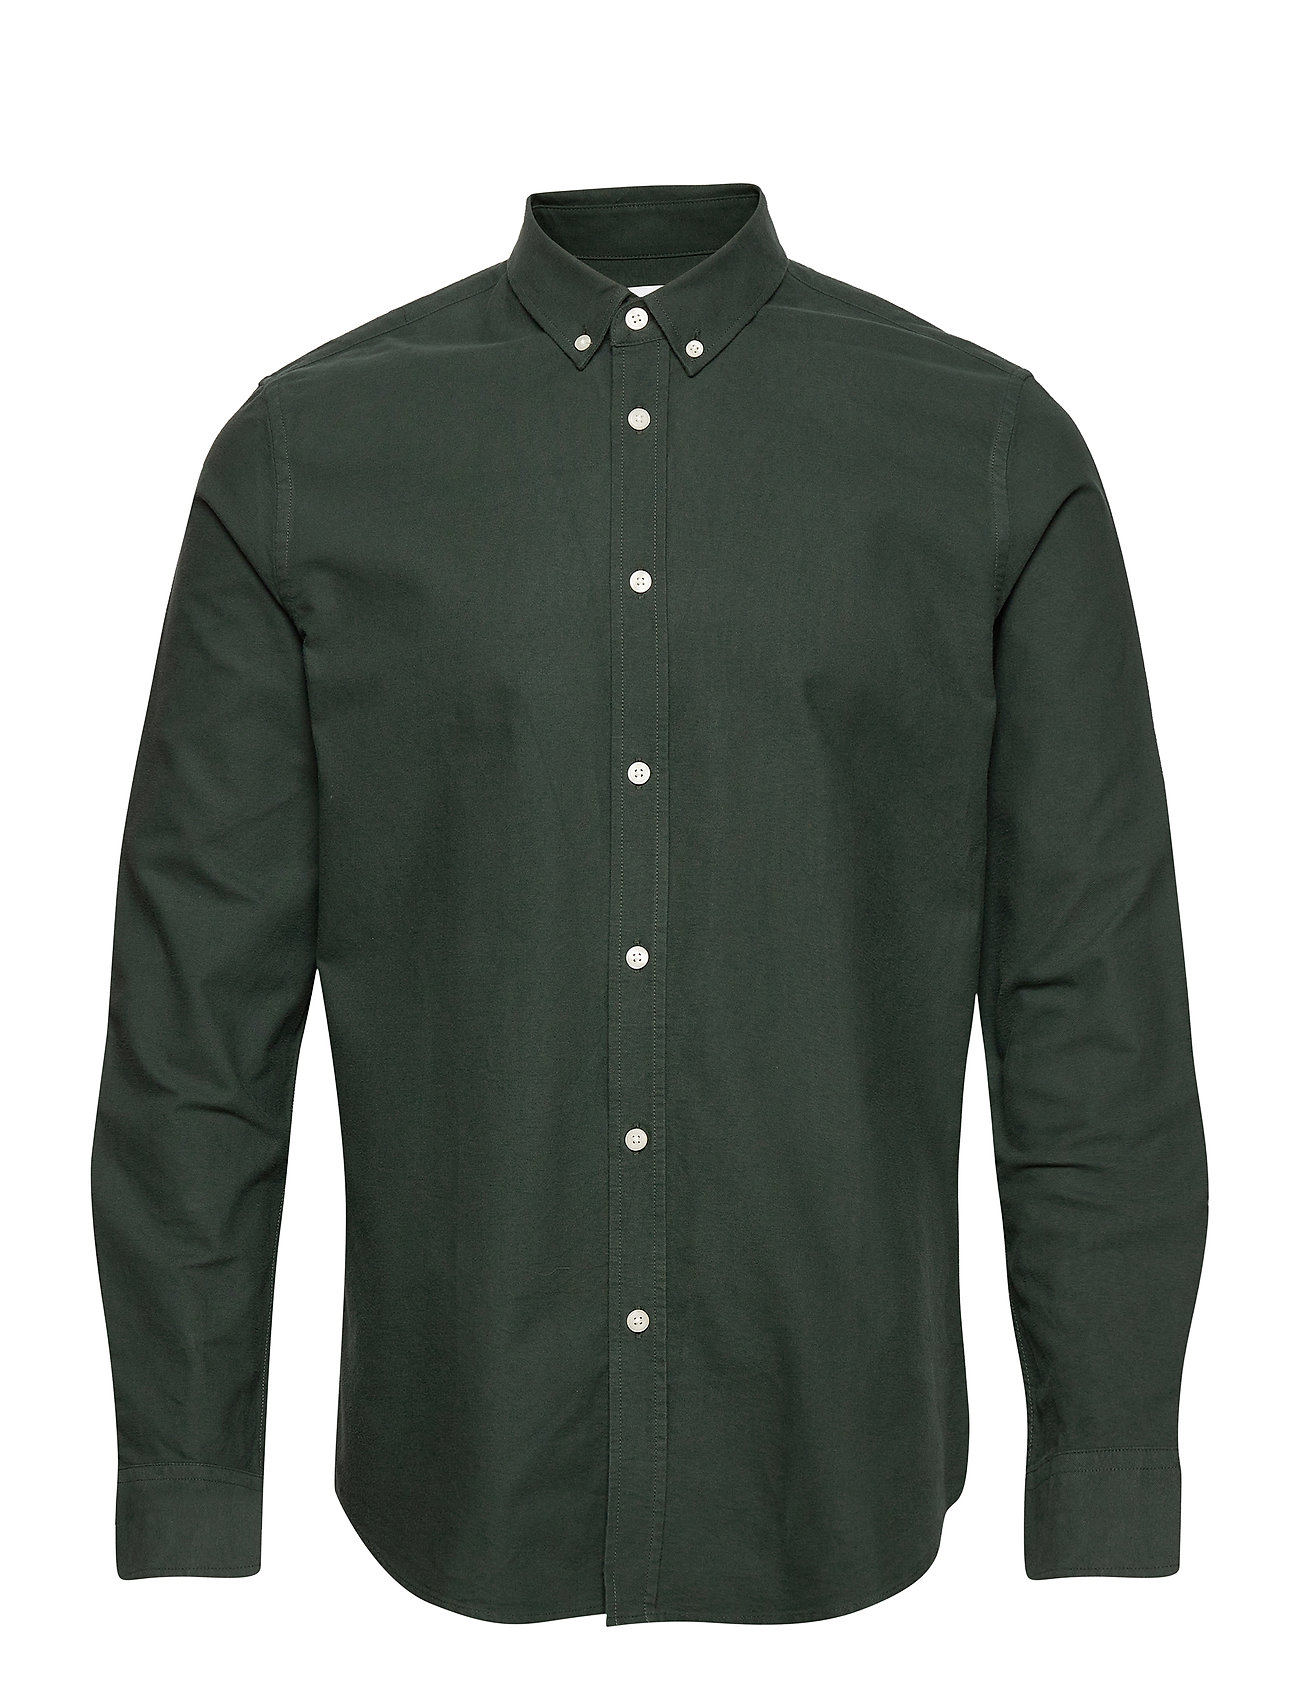 Samsøe & skjorter – Liam Bx 8111 Skjorte Casual Grøn Samsøe til herre i Blå -